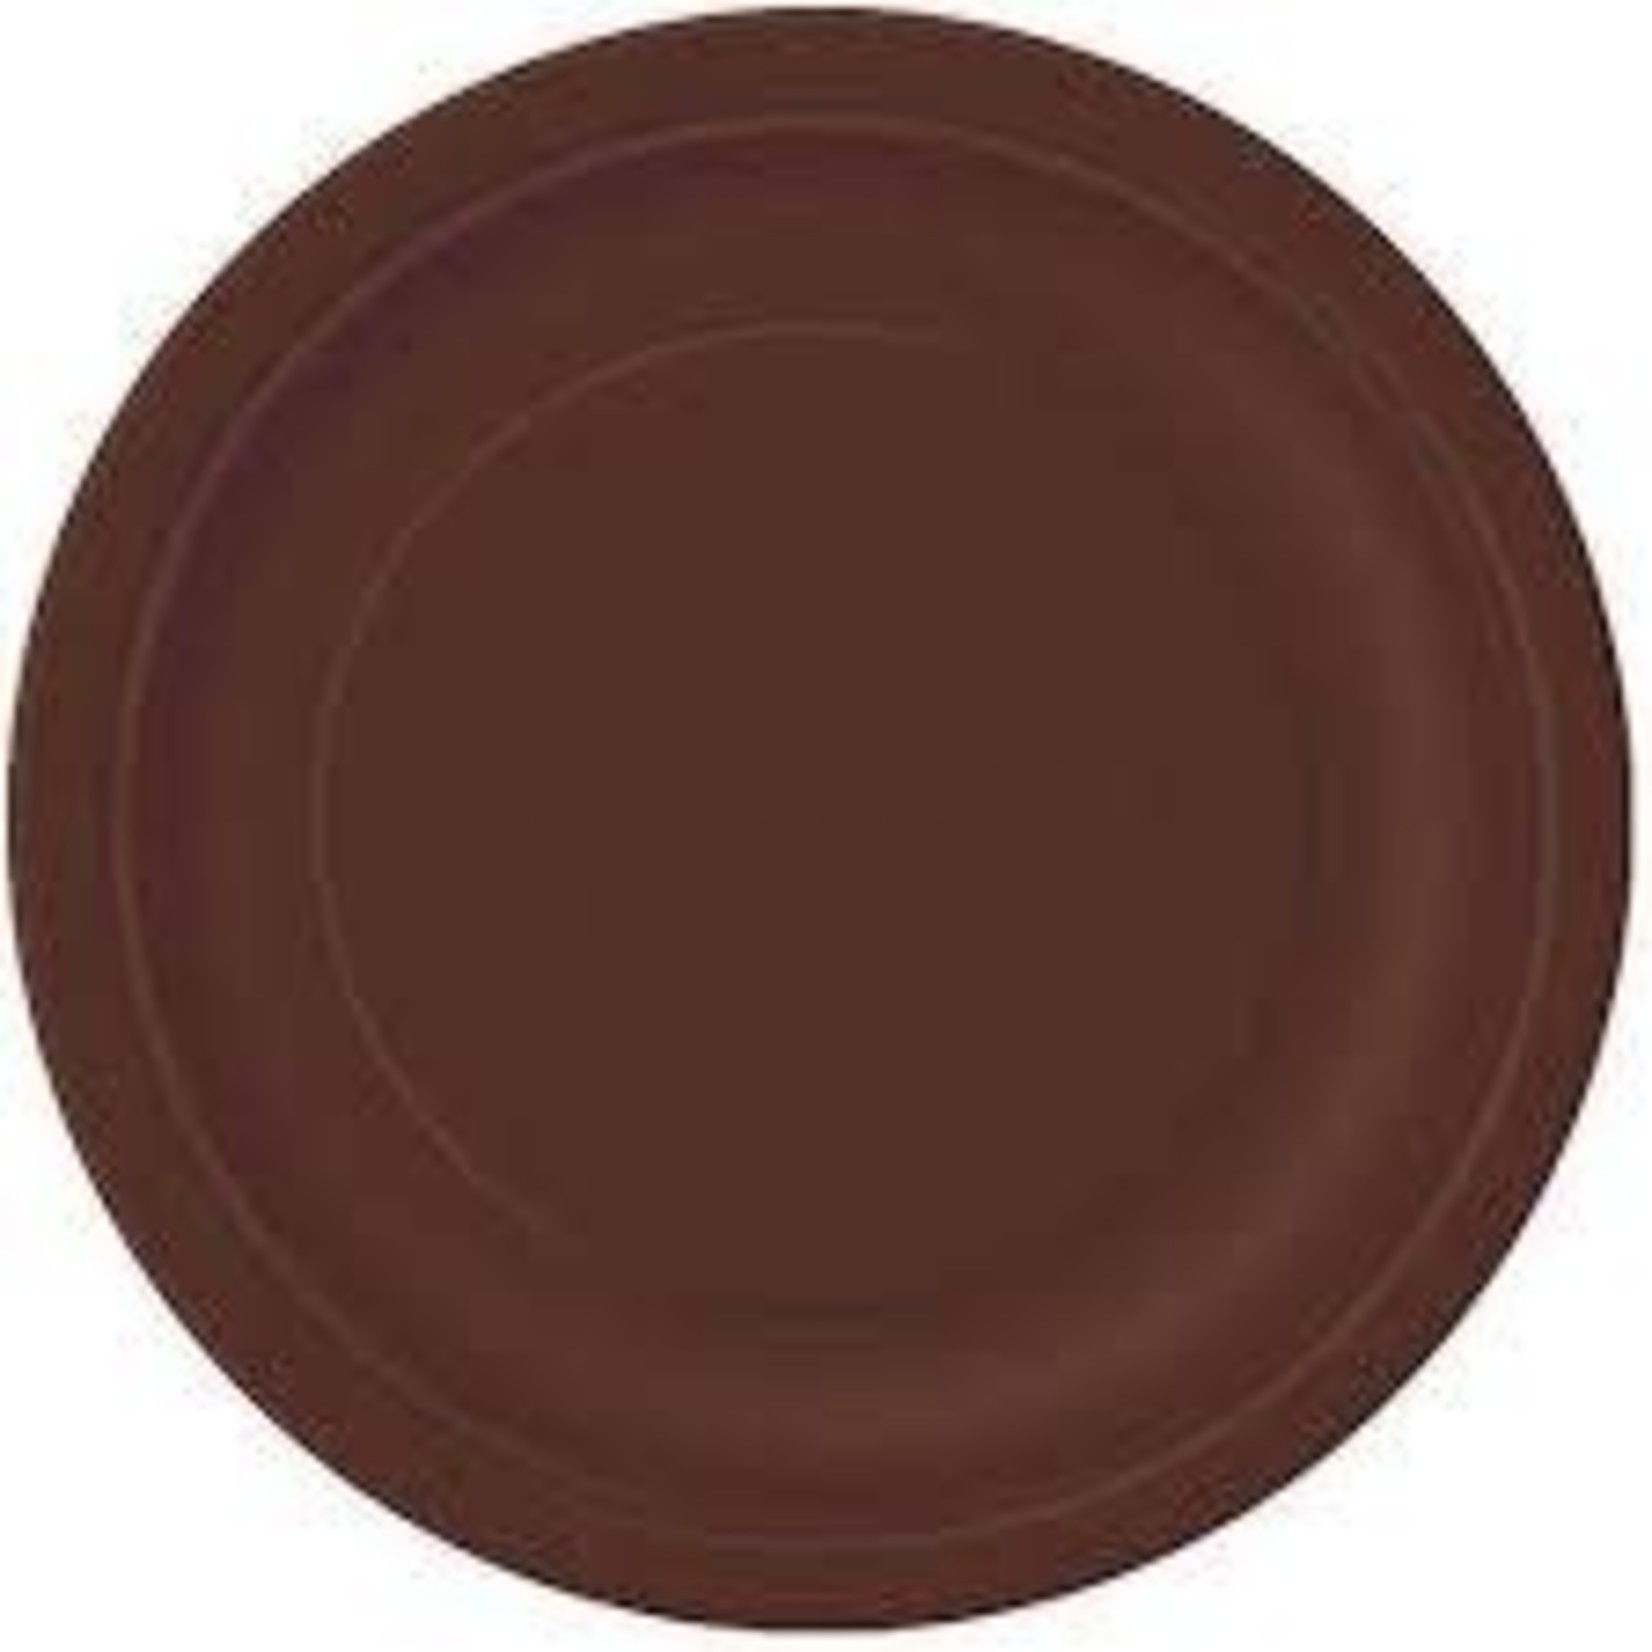 Brown Dinner Plates 16ct